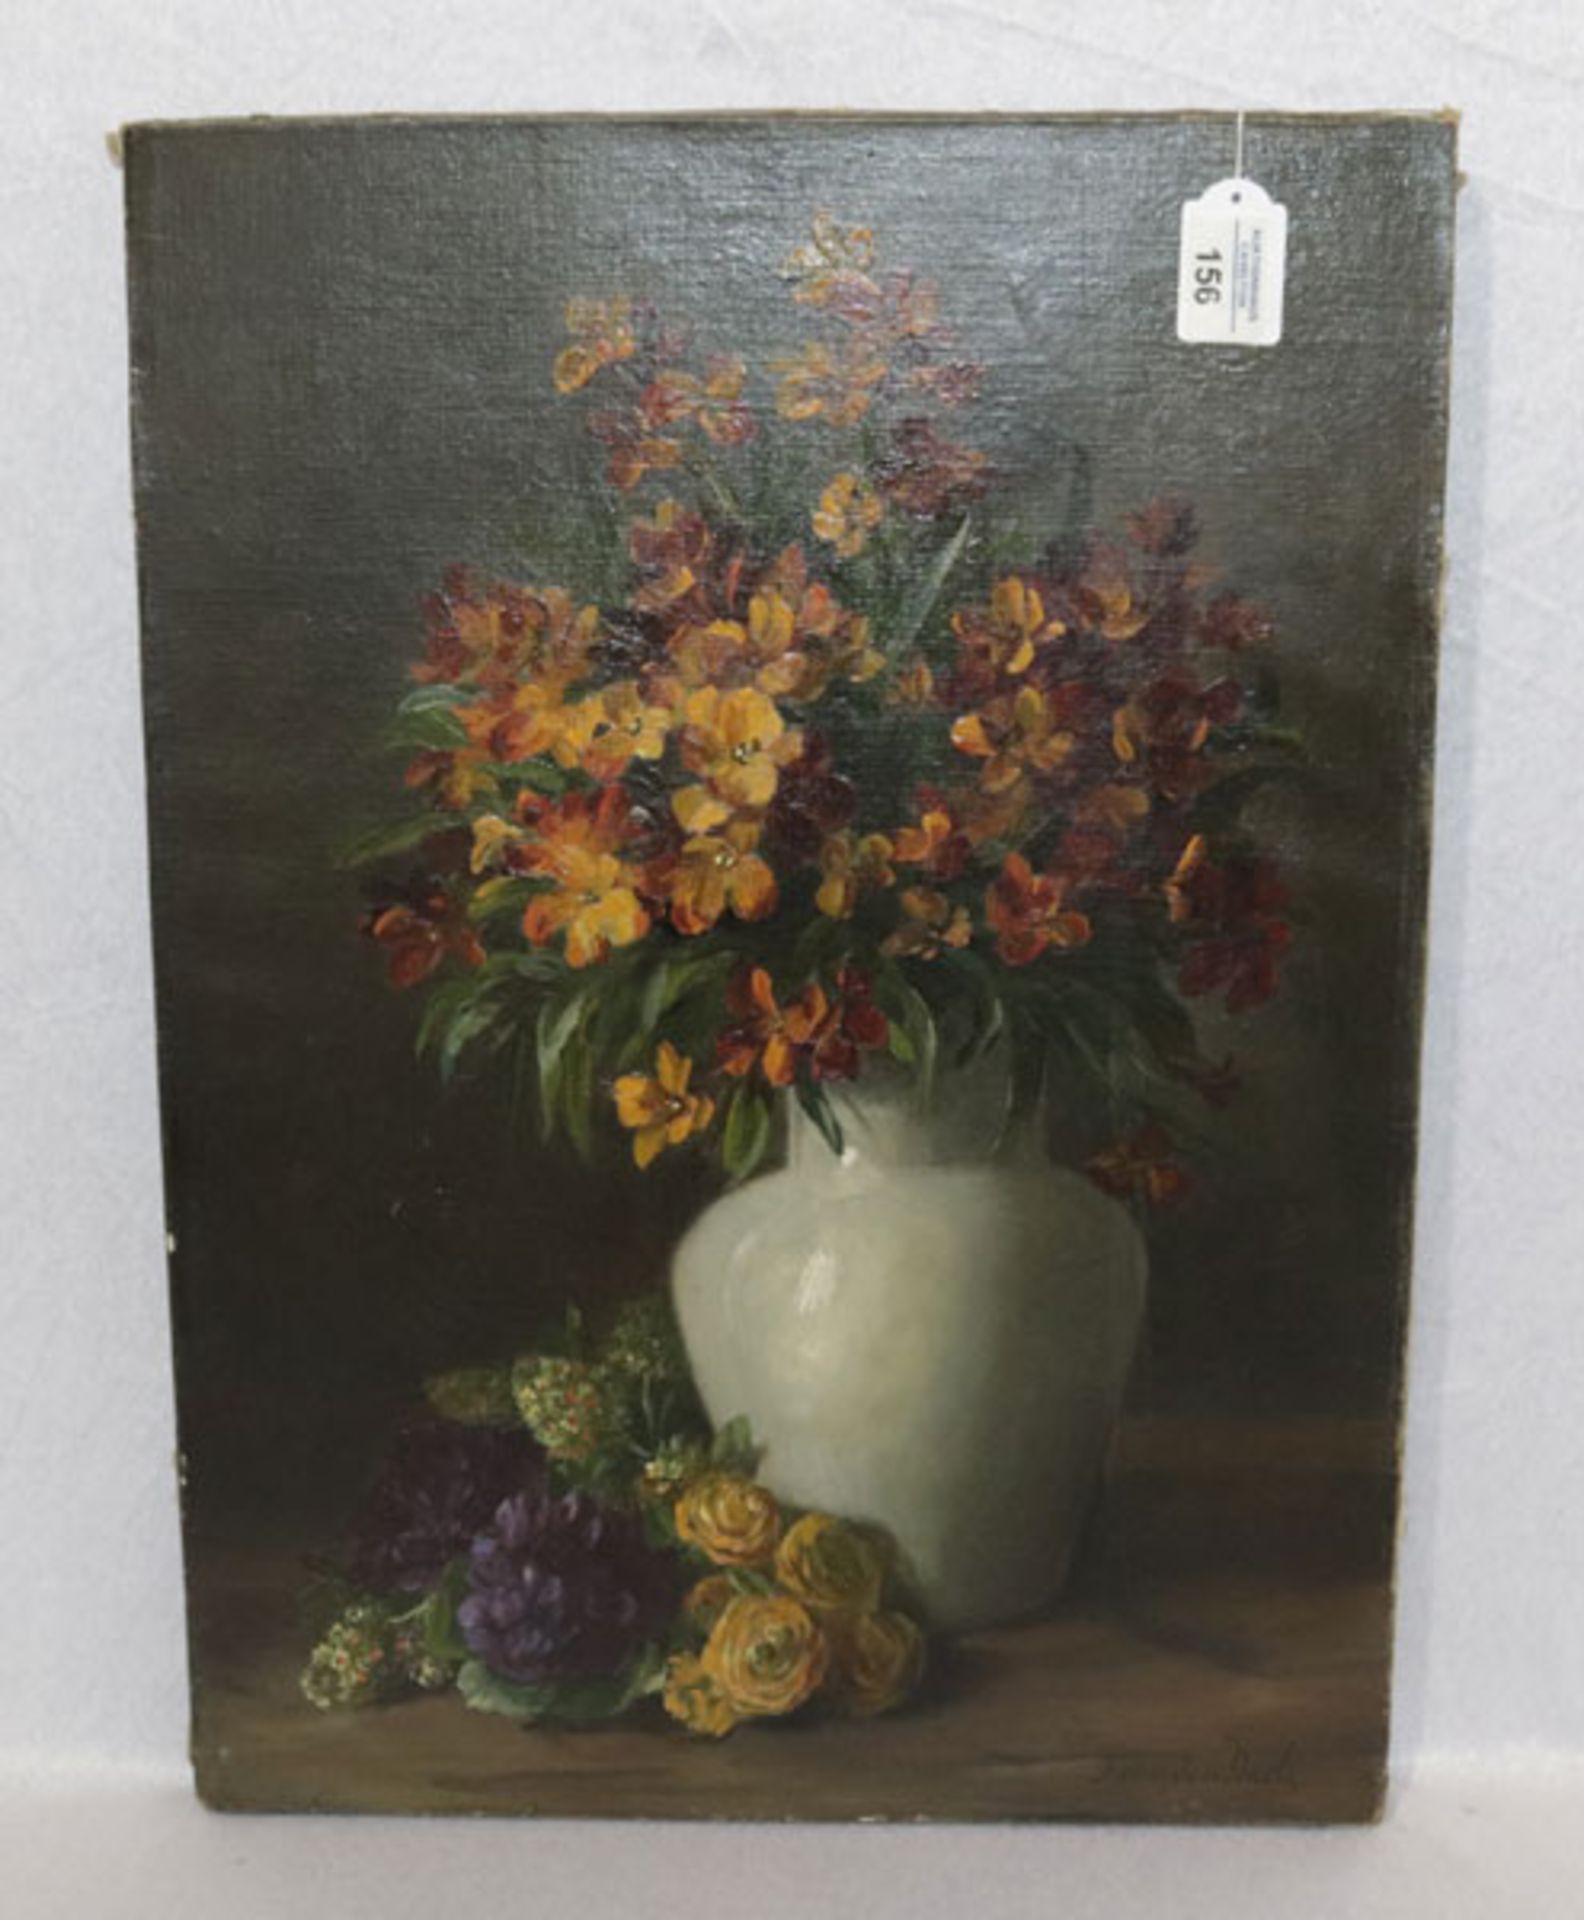 Gemälde ÖL/LW 'Blumen in Vase', signiert F. van den Daele, * 1891 München + 1930, ohne Rahmen 58